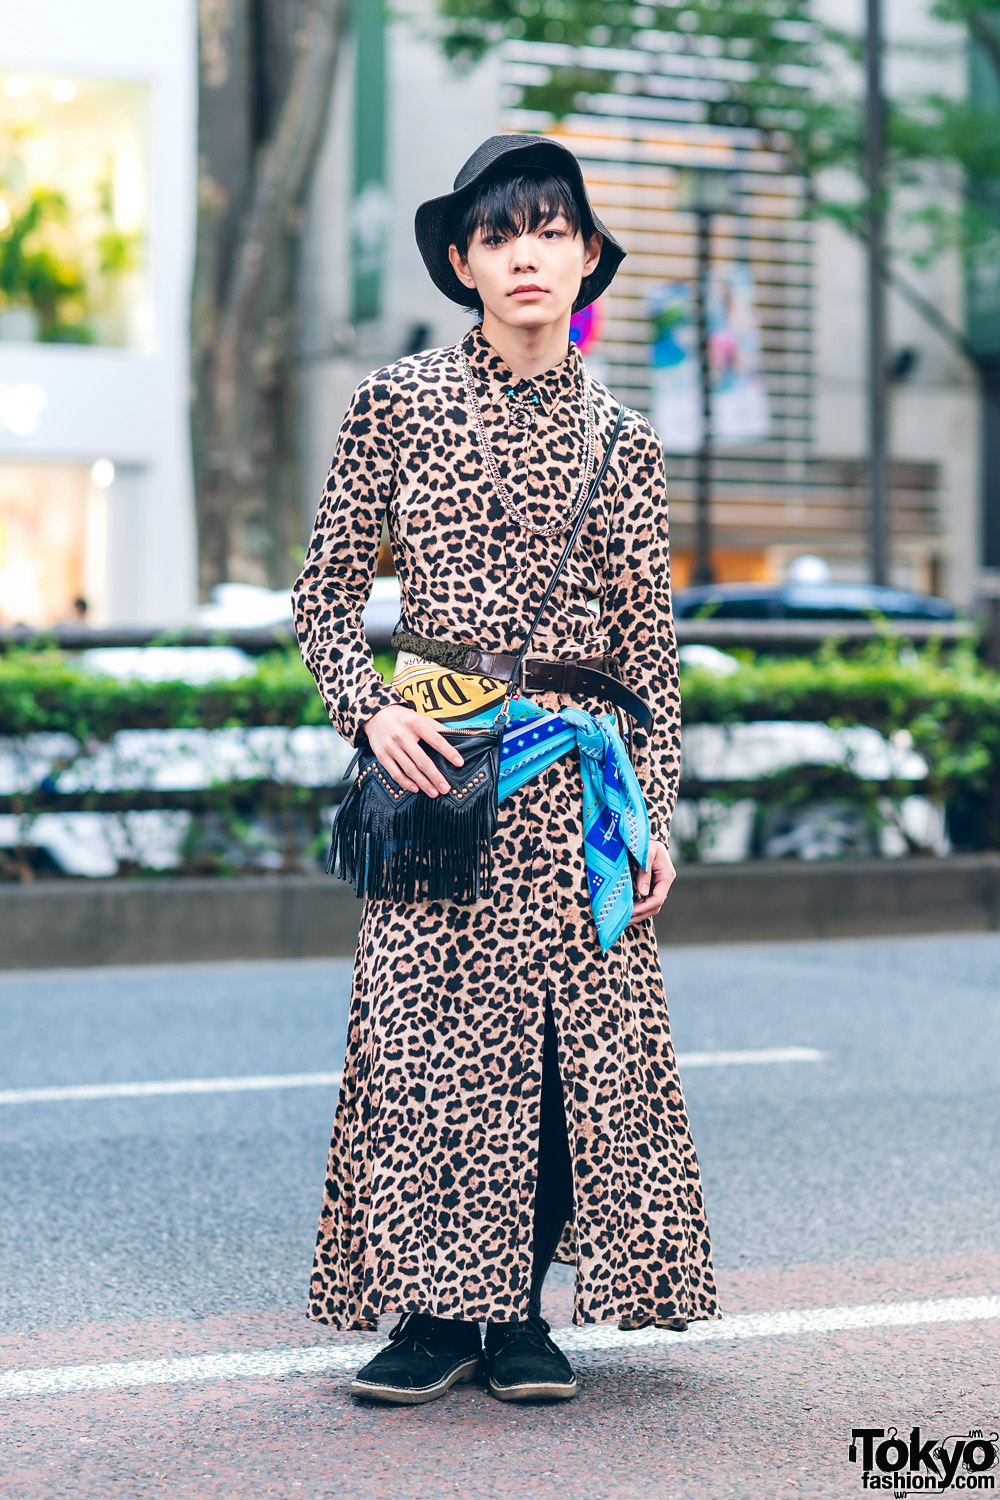 Harajuku Street Style w/ Leopard Print Dress, Fringe Bag, Floppy Hat, Zara, El ConductorH, Muze & Gara